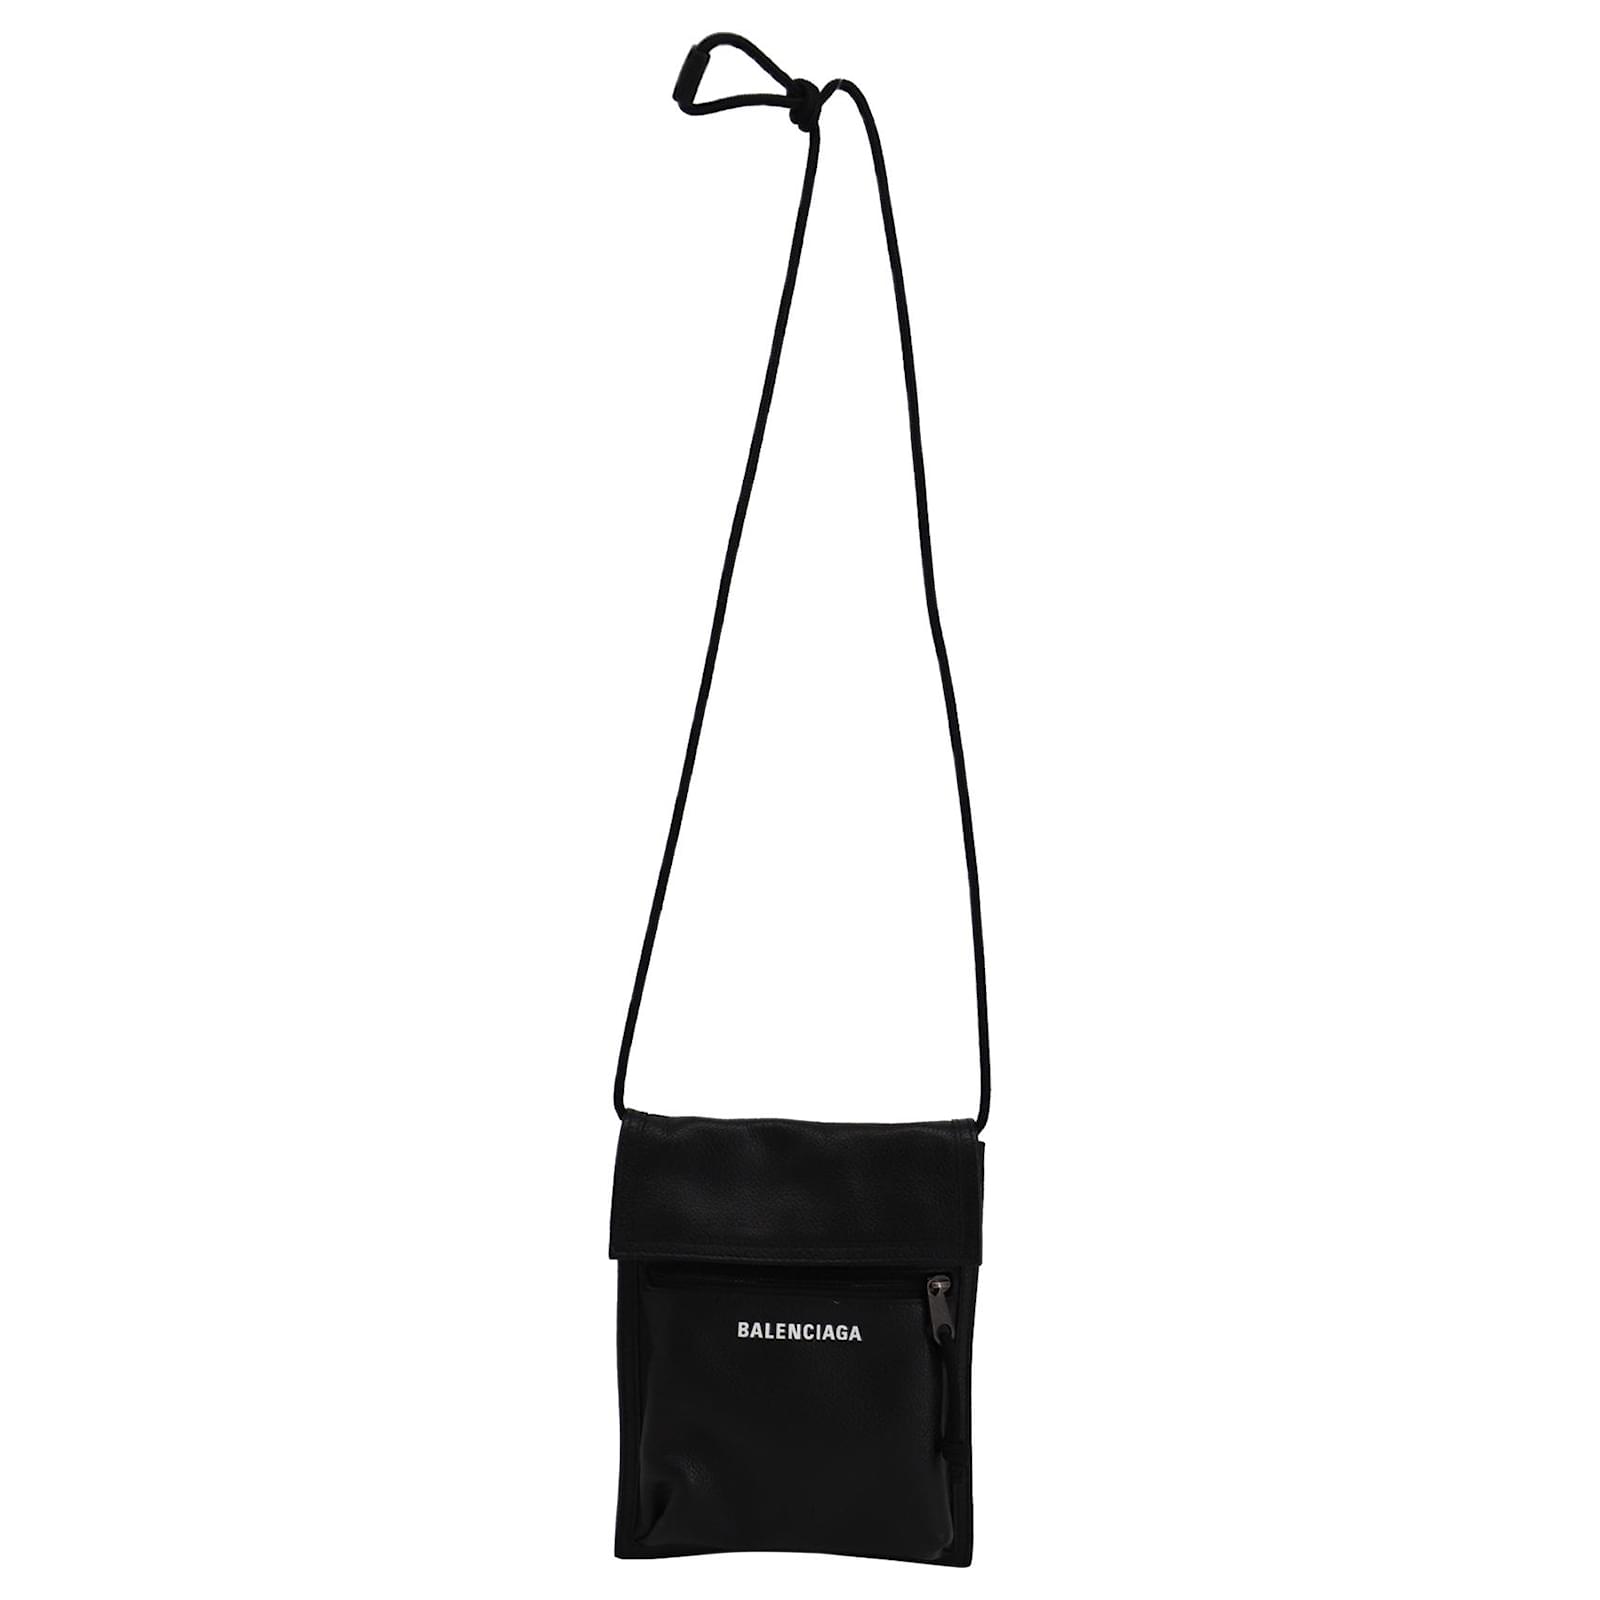 Balenciaga Explorer Small Leather Pouch with Strap - Black